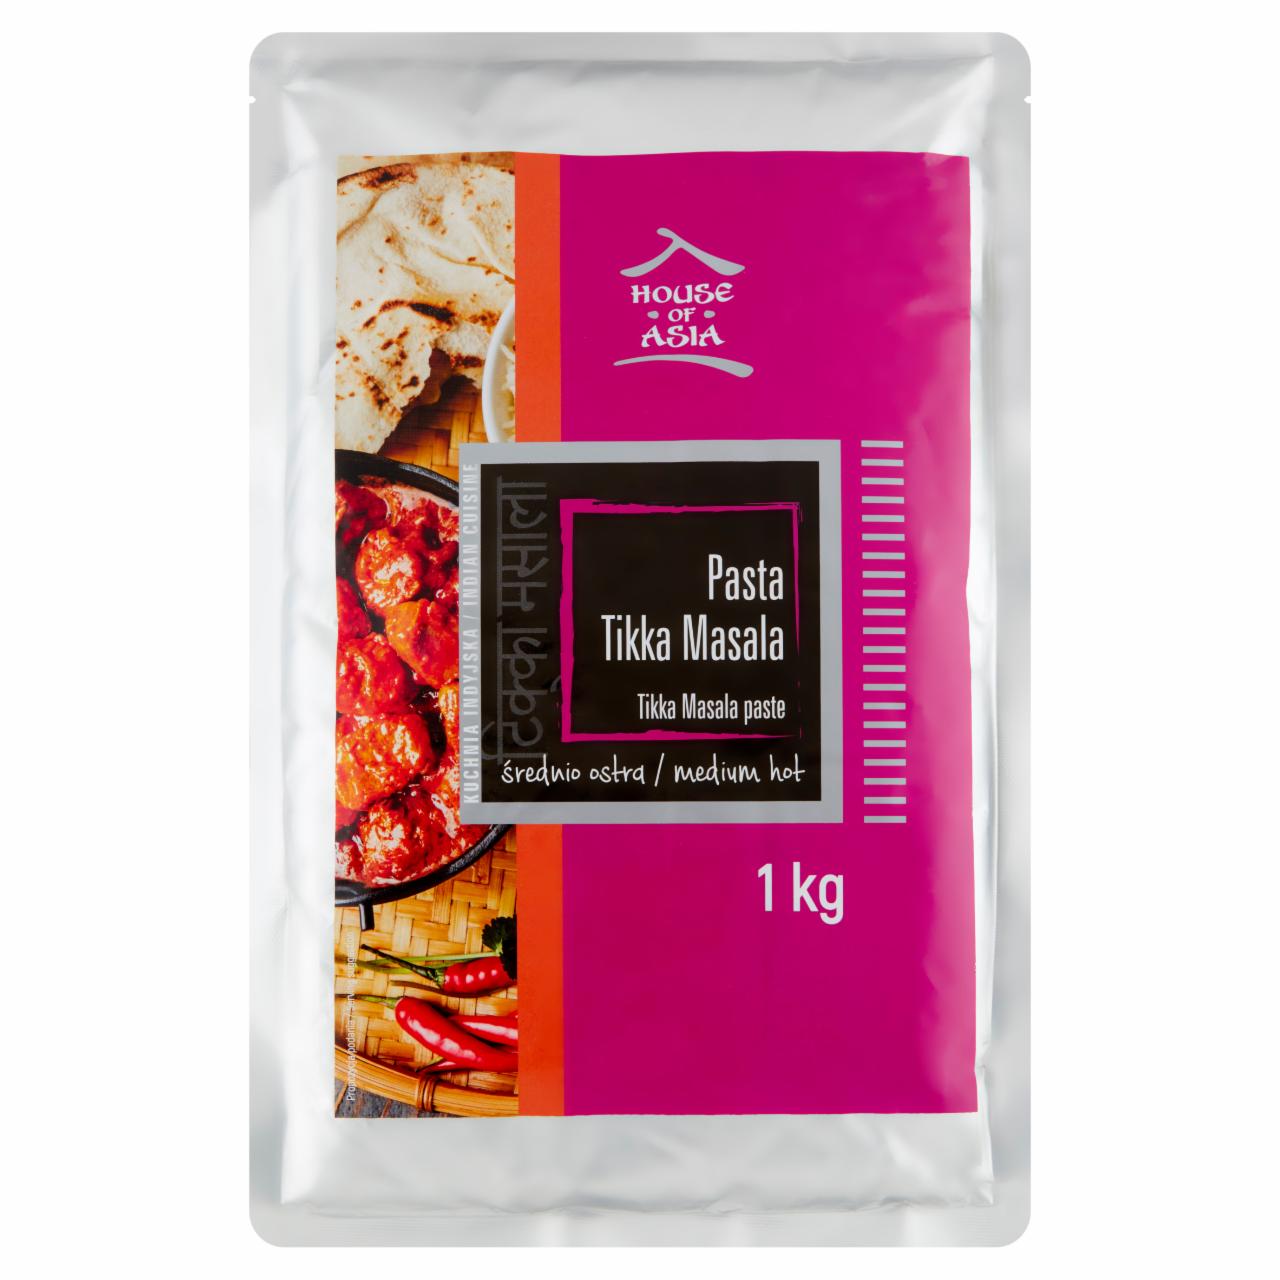 Zdjęcia - House of Asia Pasta Tikka Masala 1 kg